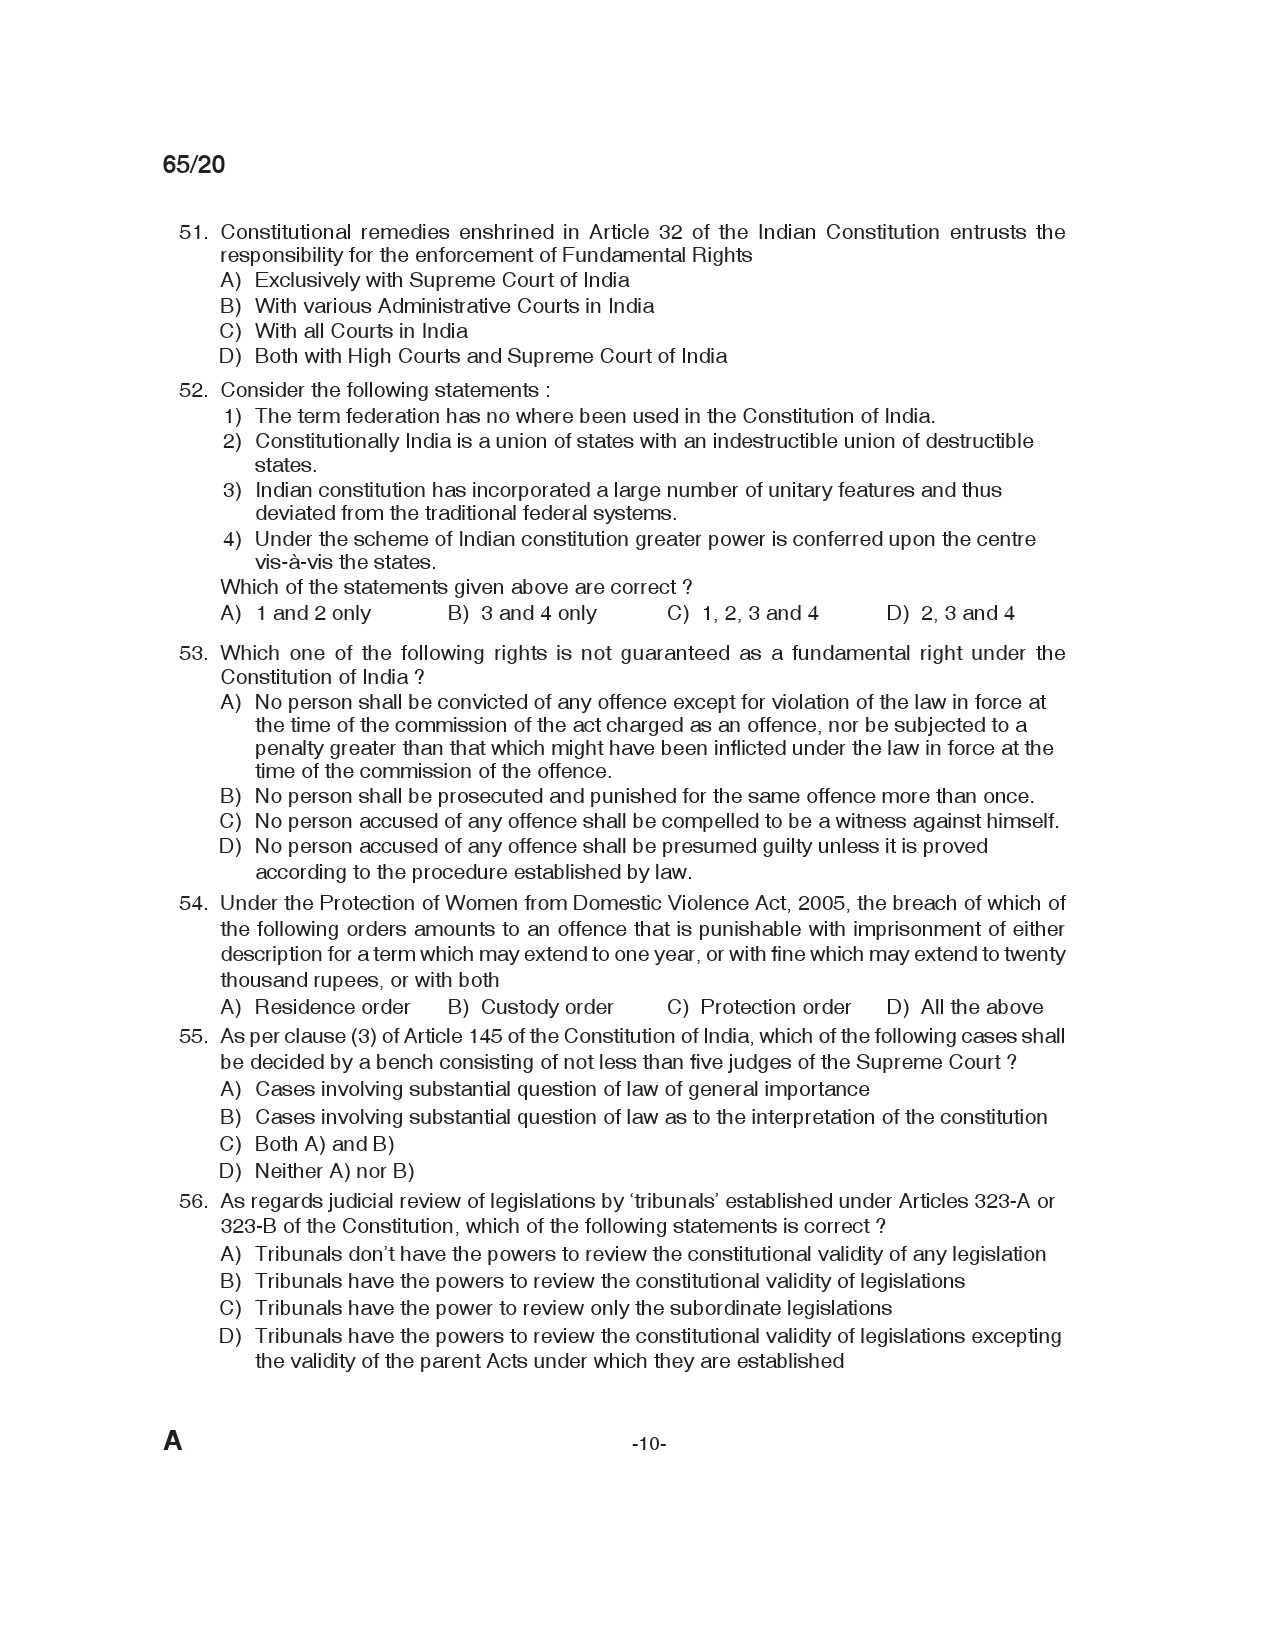 KAS Officer Paper 1 Exam 2020 Code 652020 9